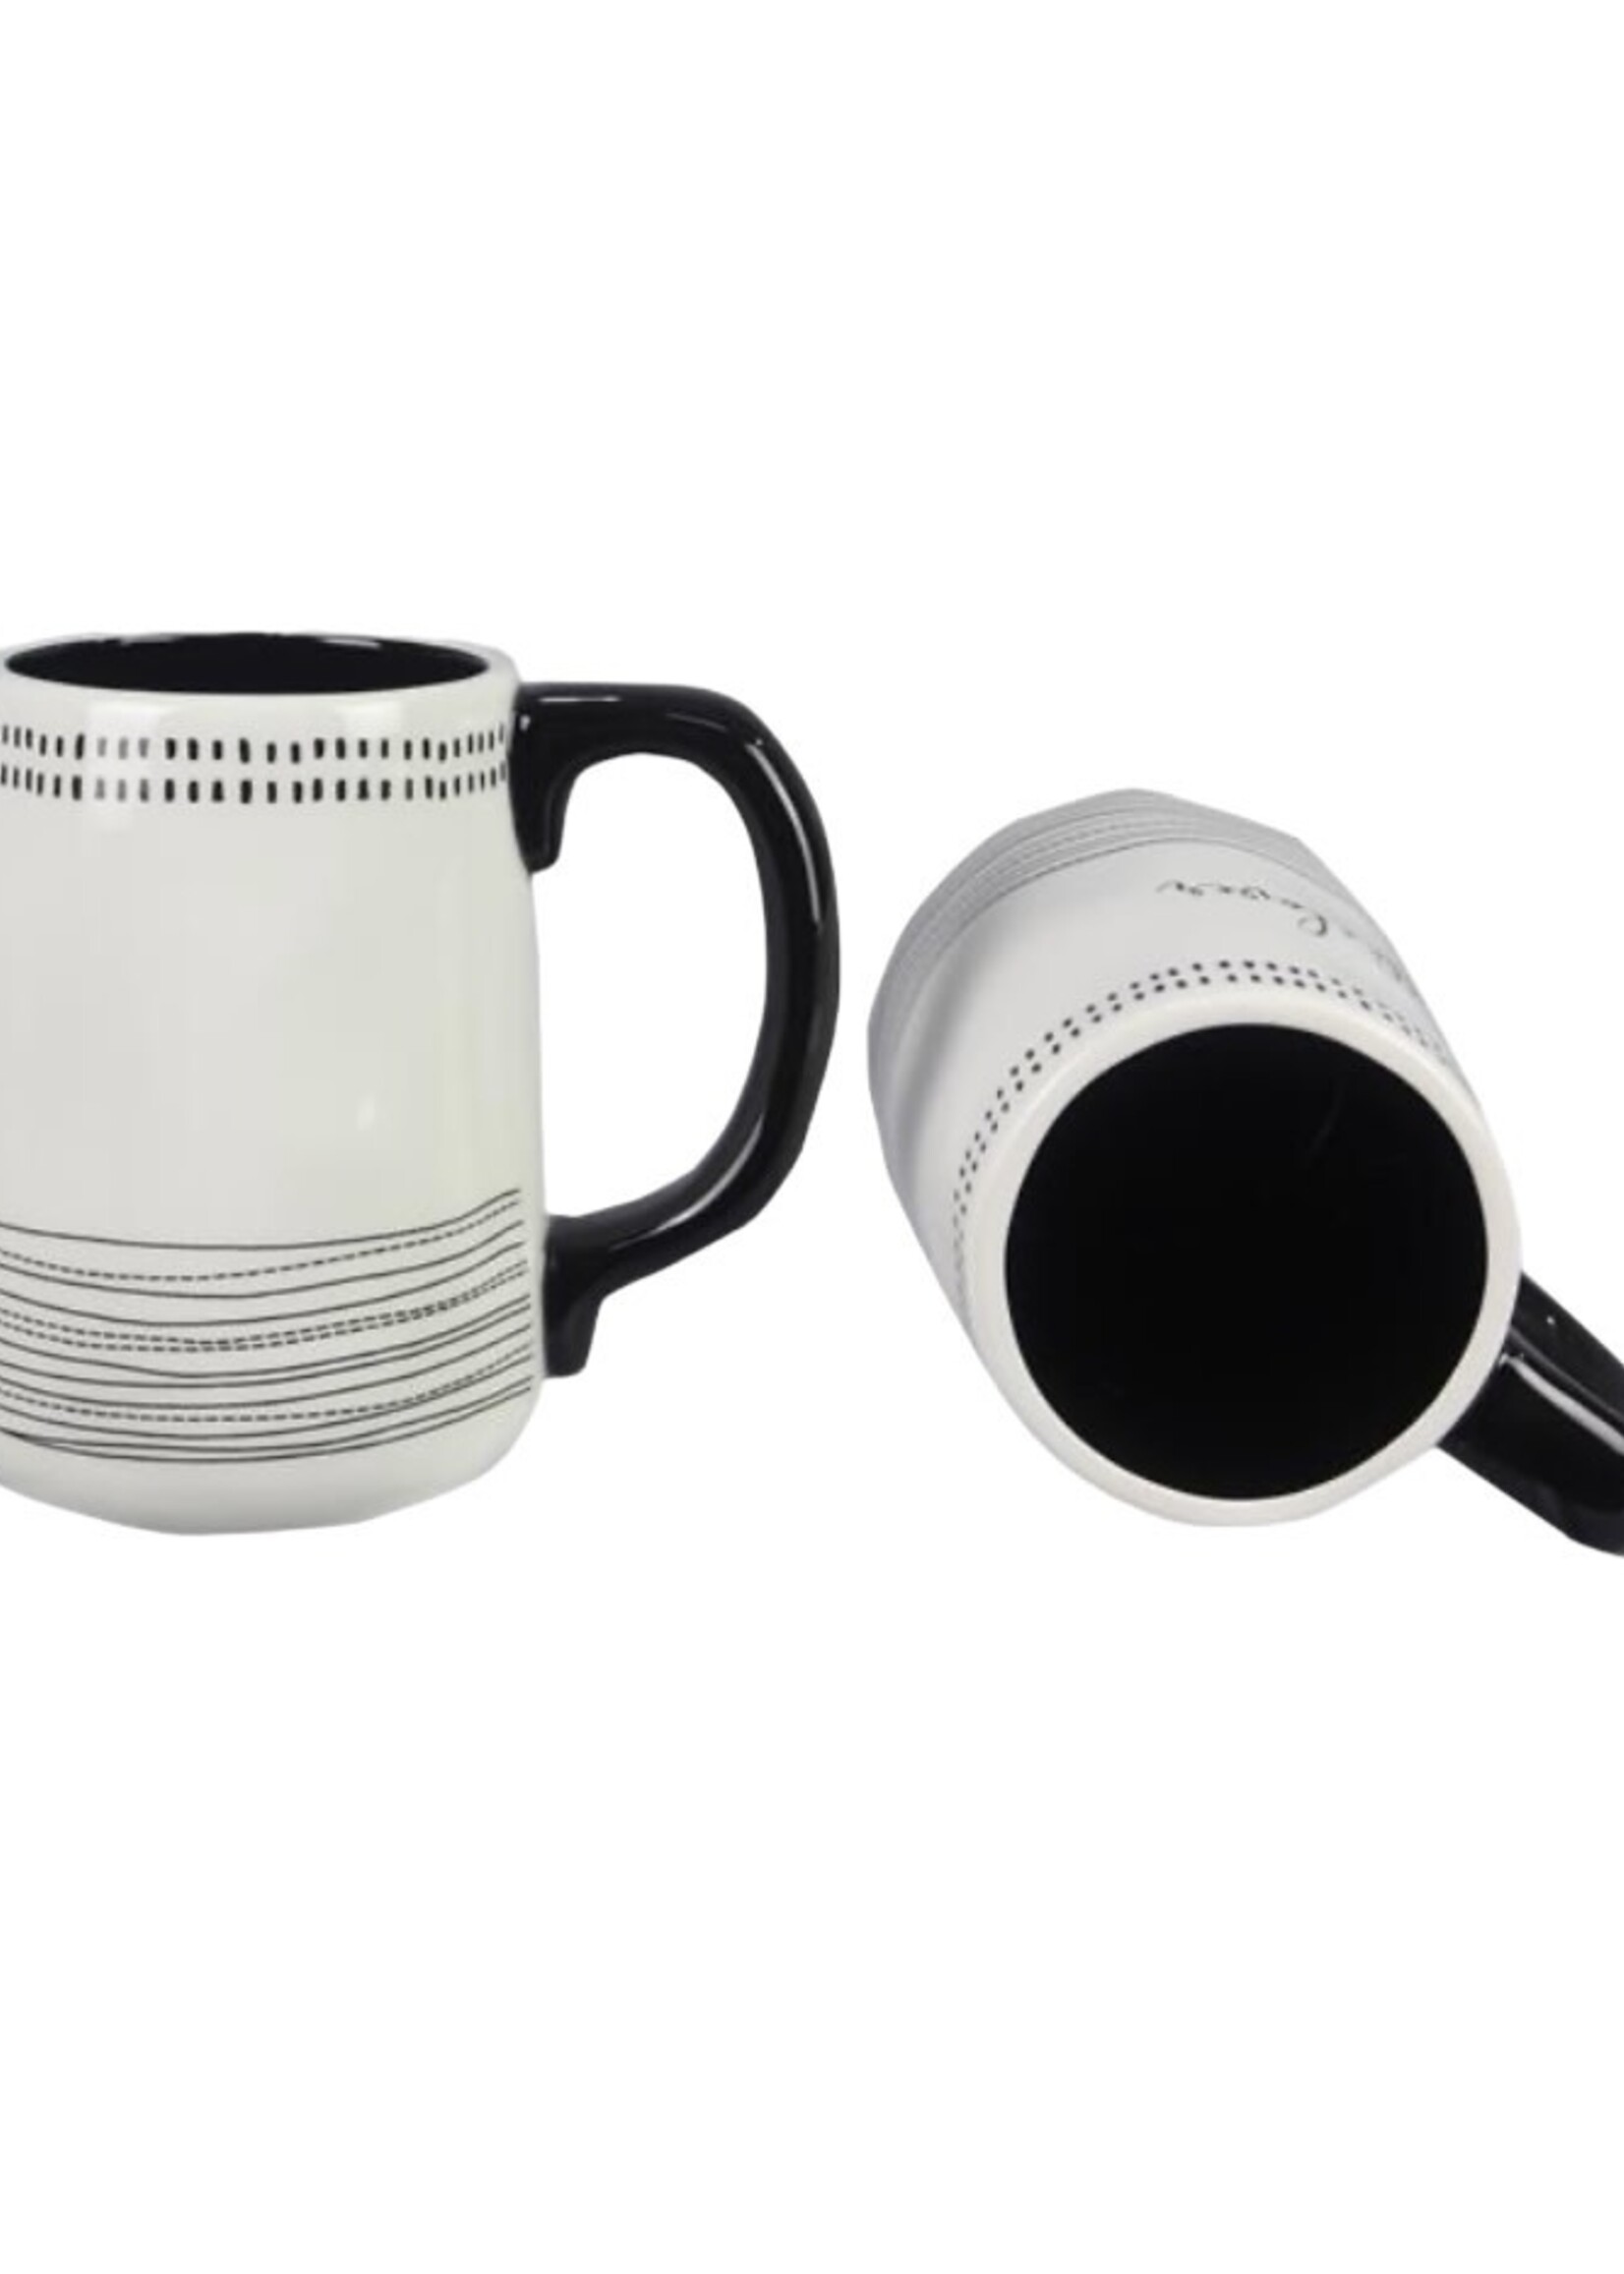 Ceramic Black and White Hashtag Mug